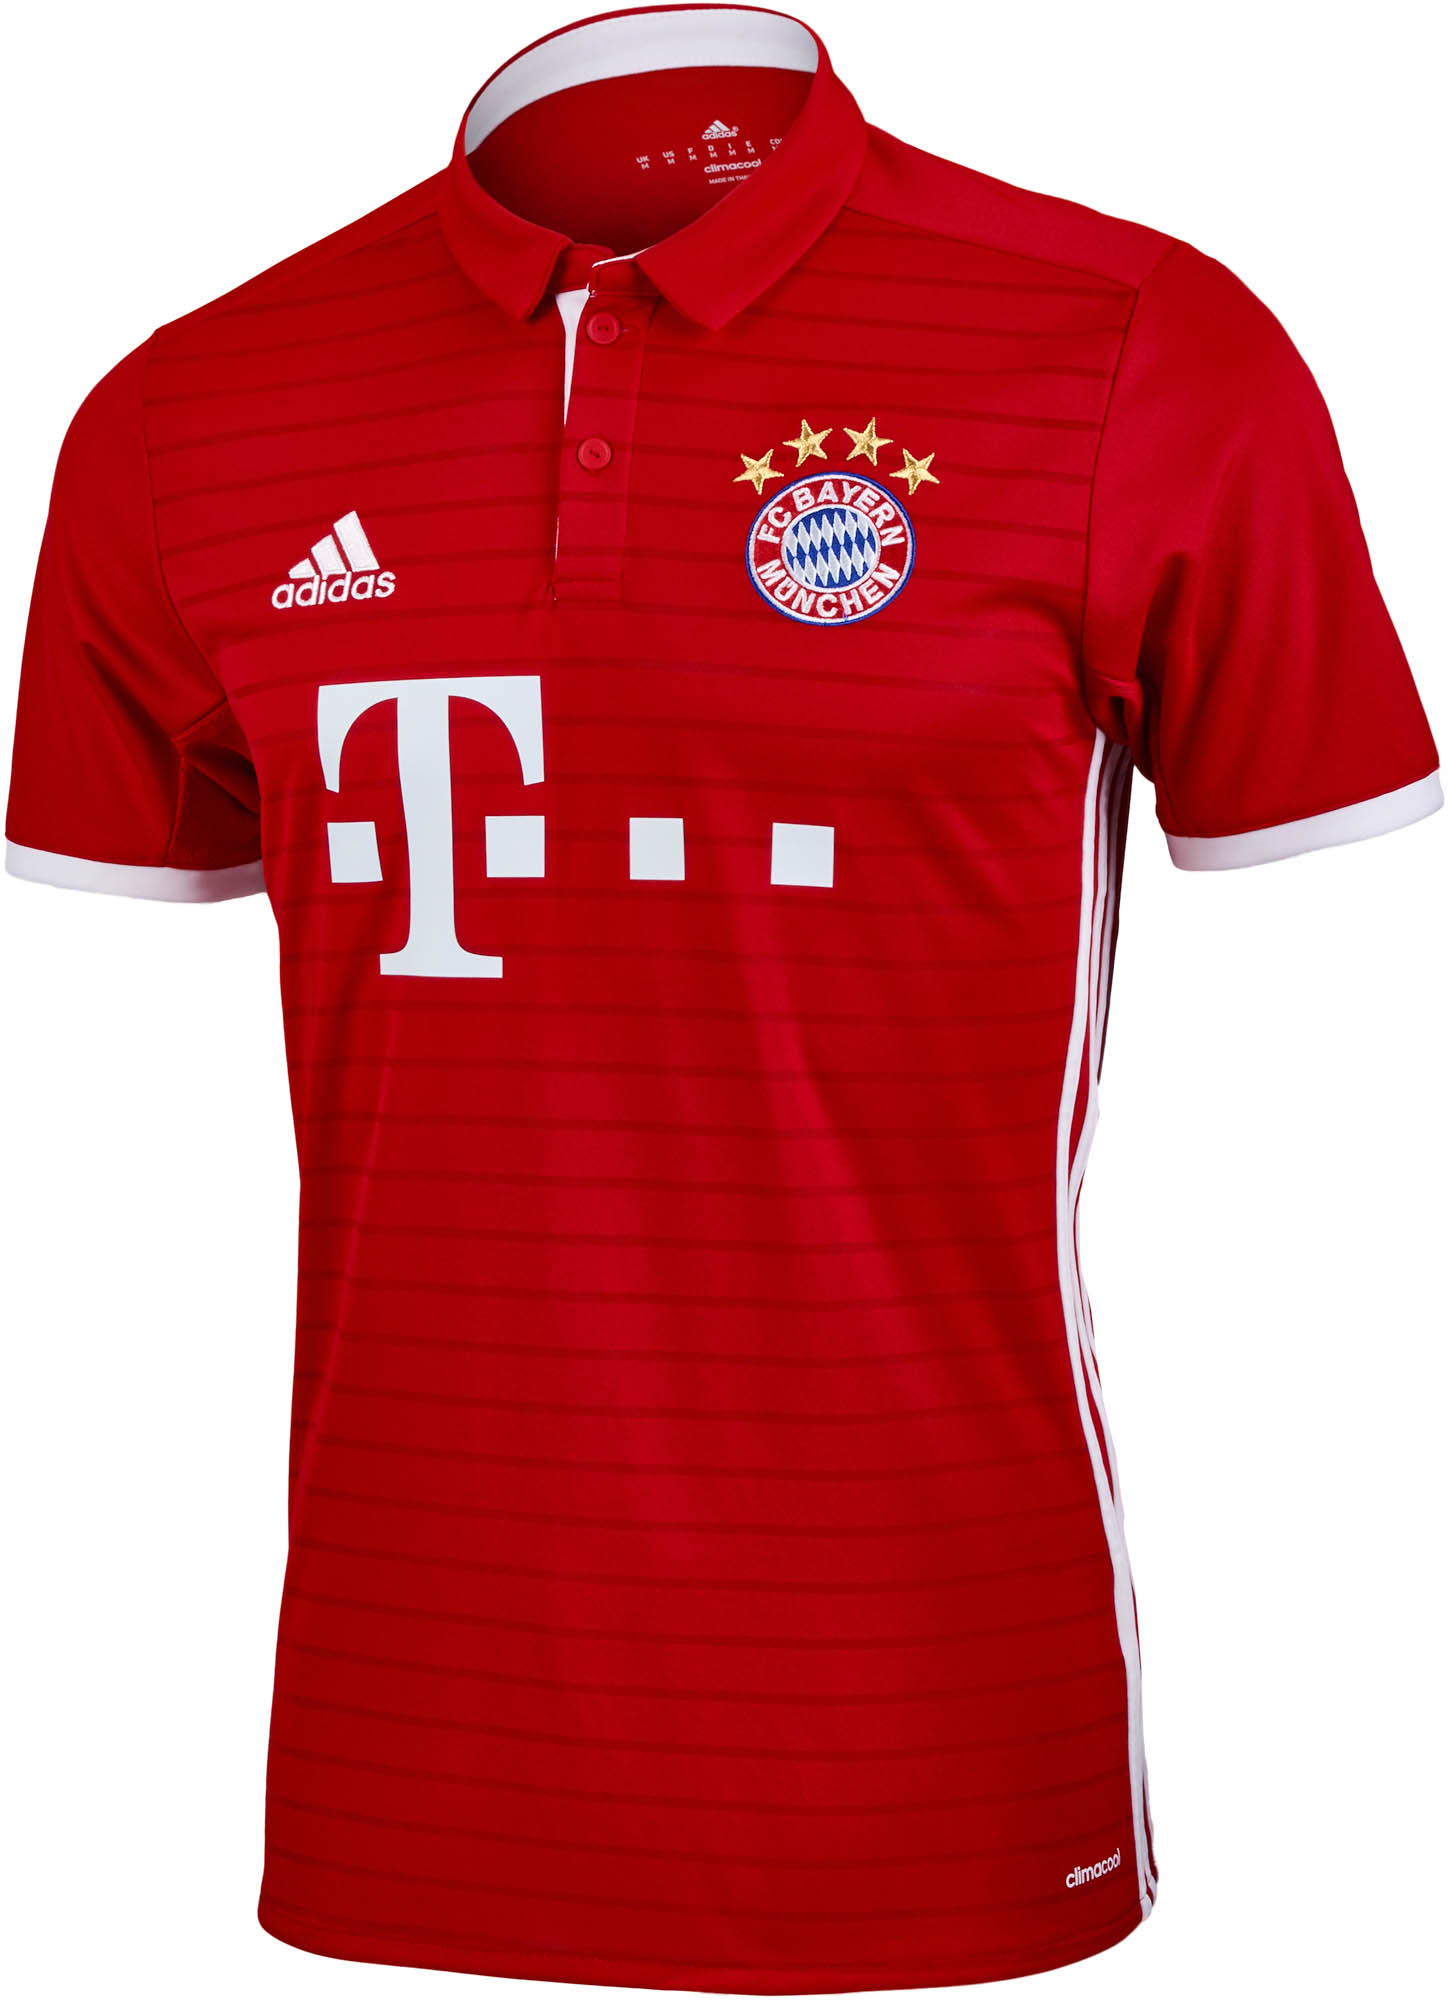 adoptar Independencia proteger adidas Bayern Munich Home Jersey 2016-17 - Soccer Master